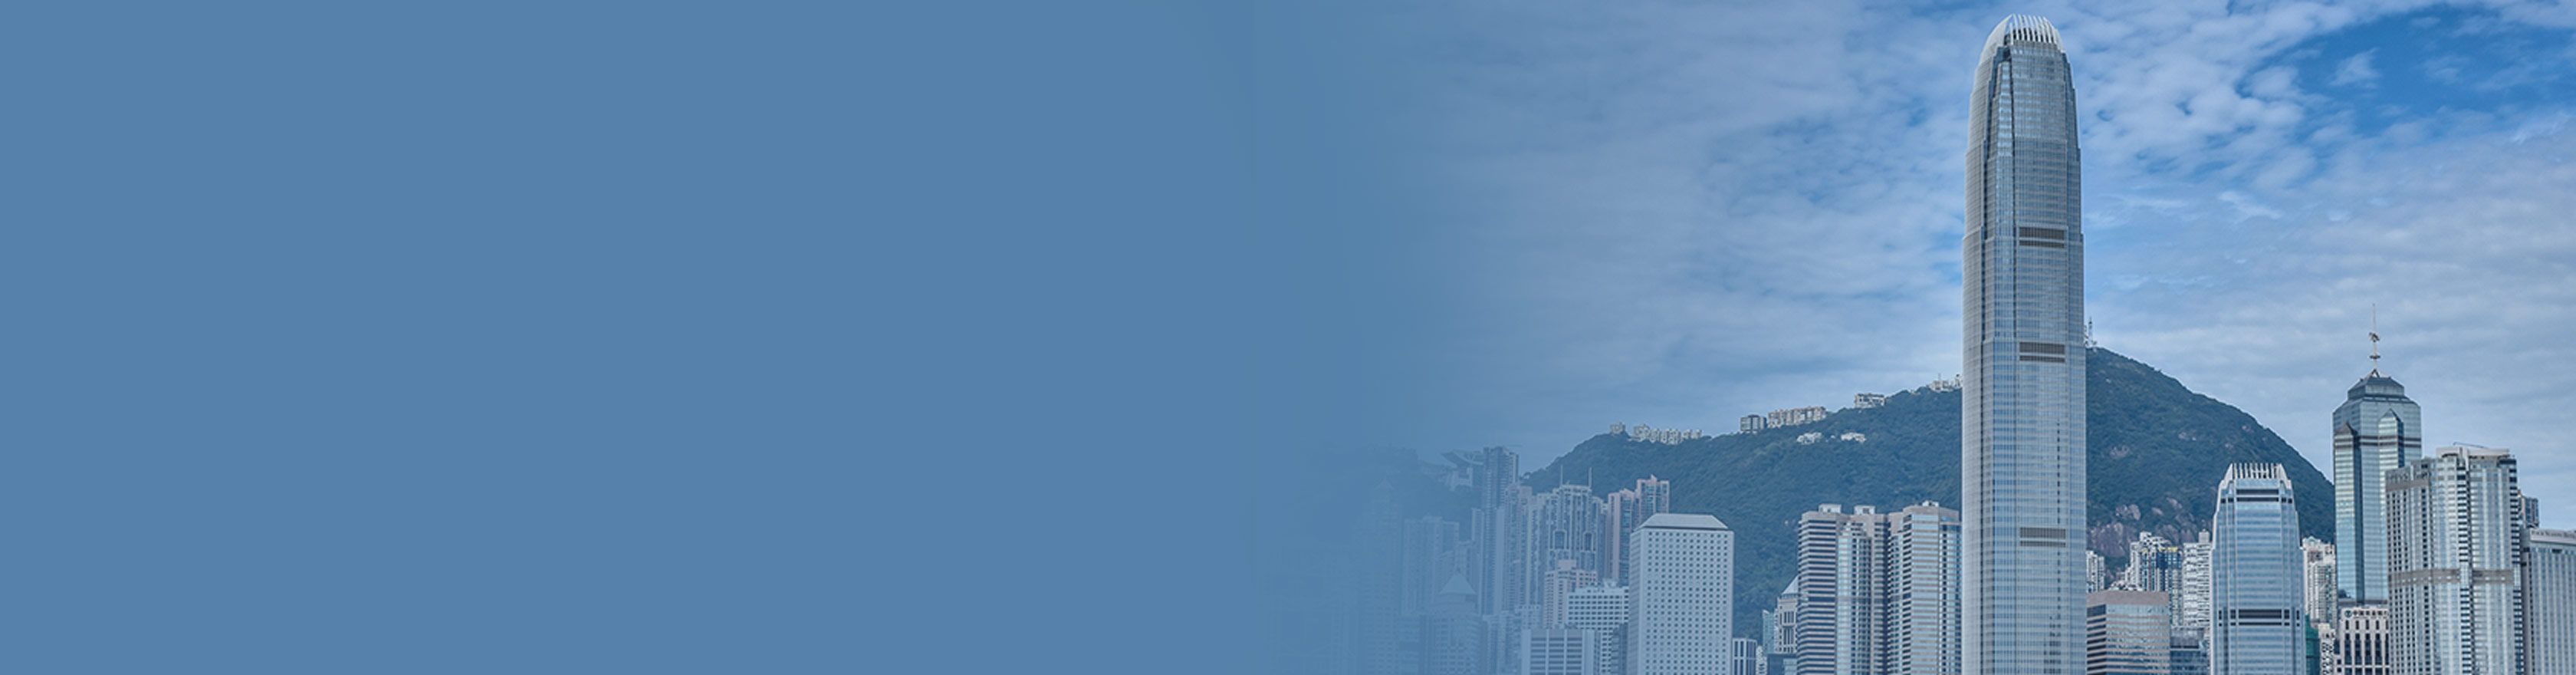 Hong Kong Authority Hong Kong as an International Financial